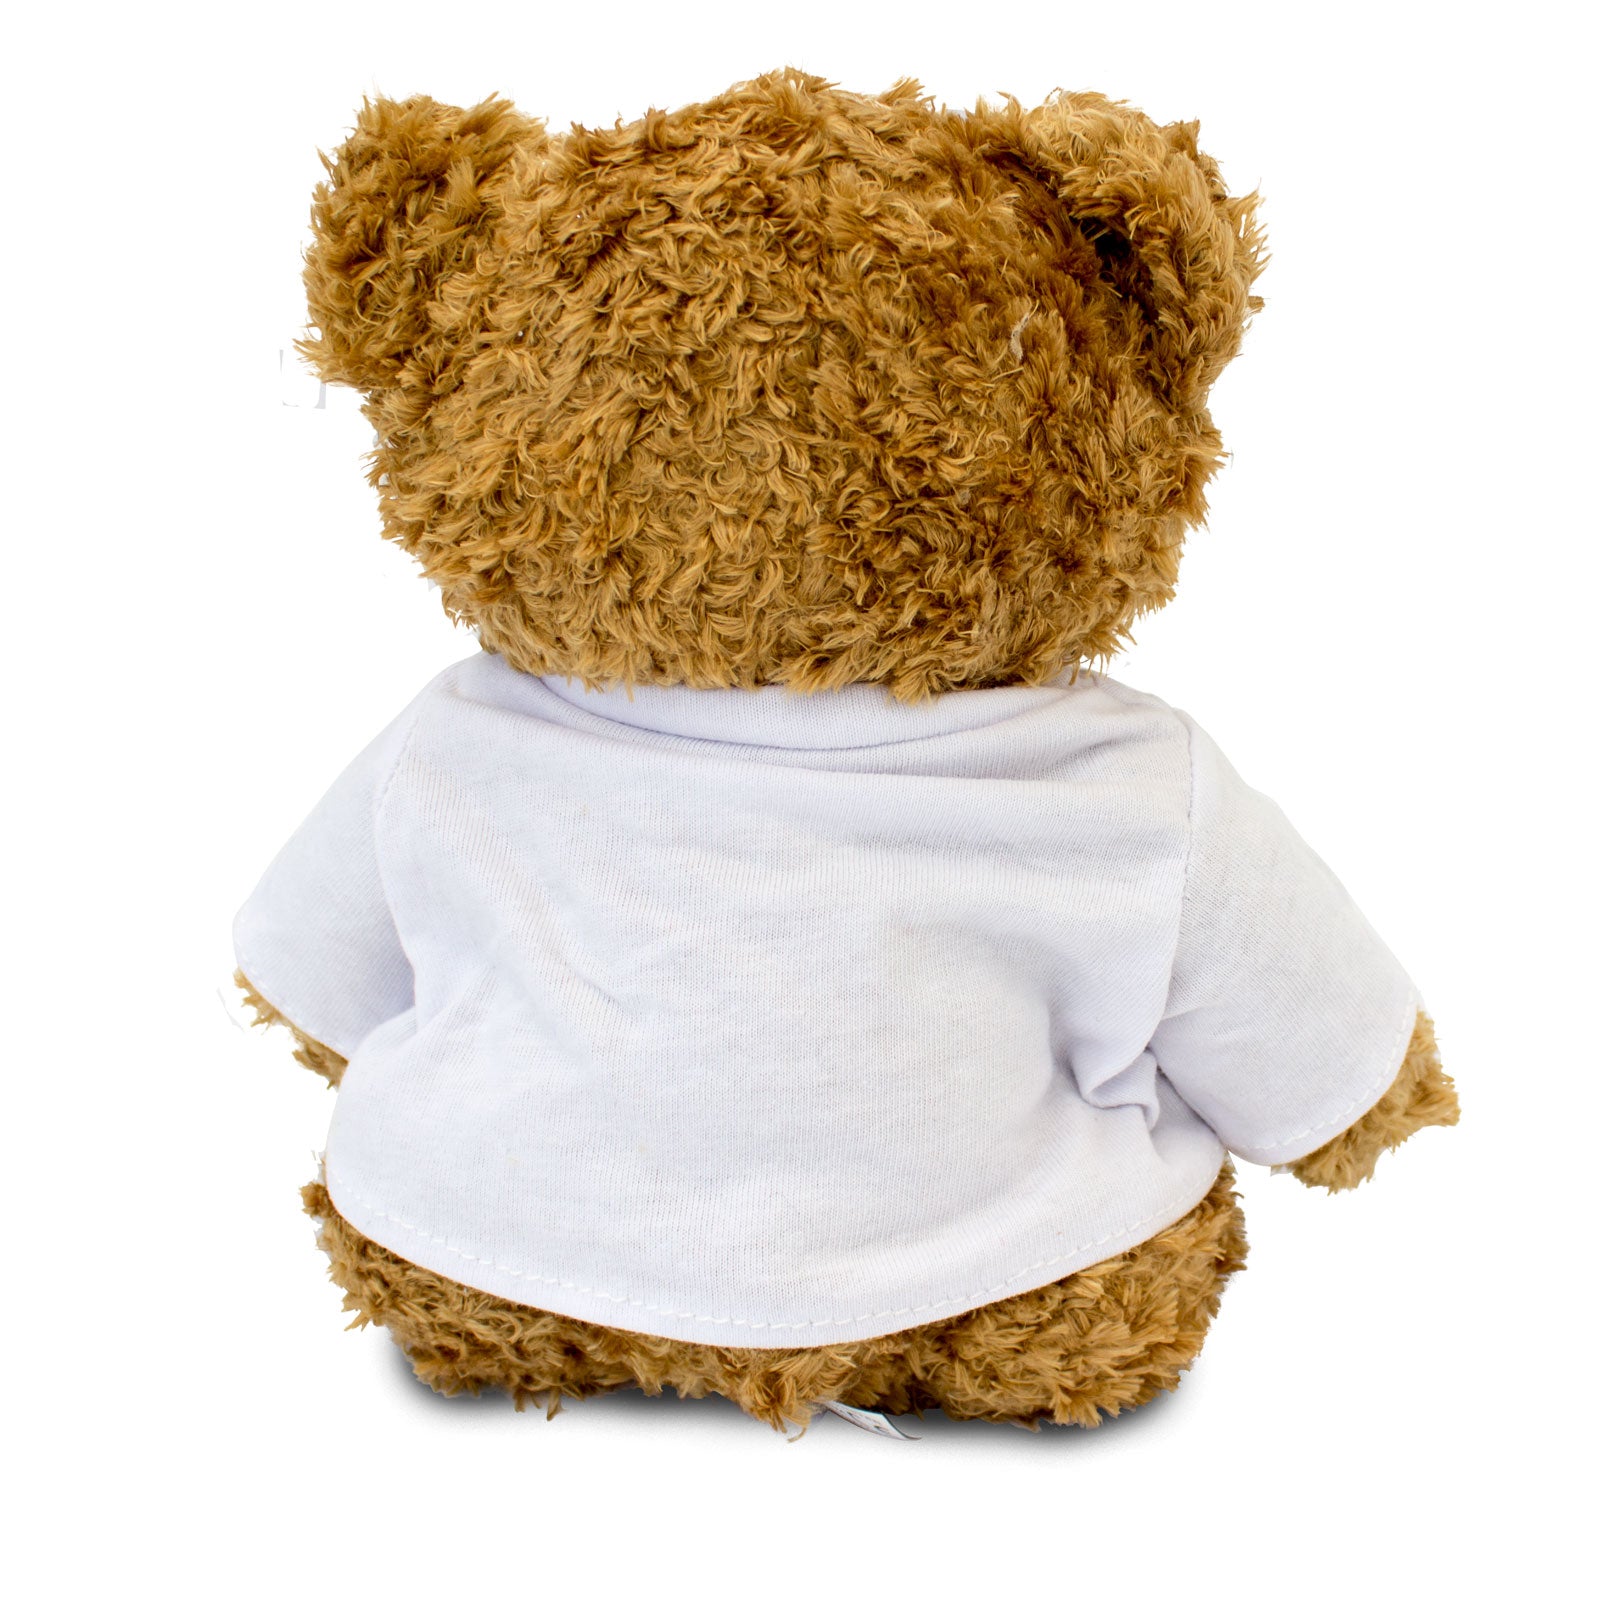 I Love Birgitta - Teddy Bear